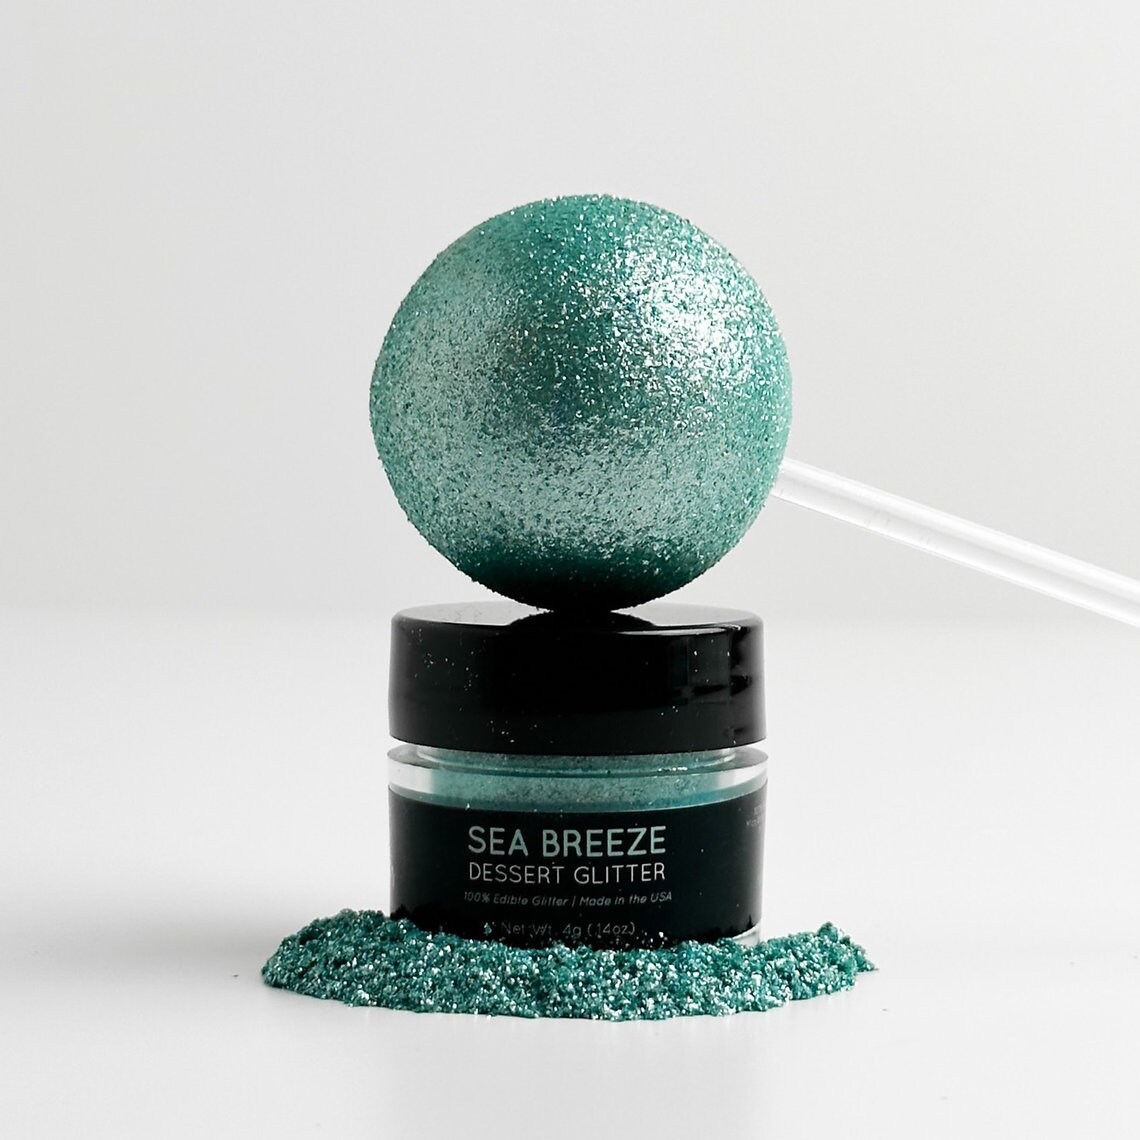 Shine Dessert Glitter: &#x22;Sea Breeze&#x22; - Teal Turquoise Edible Dessert Glitter